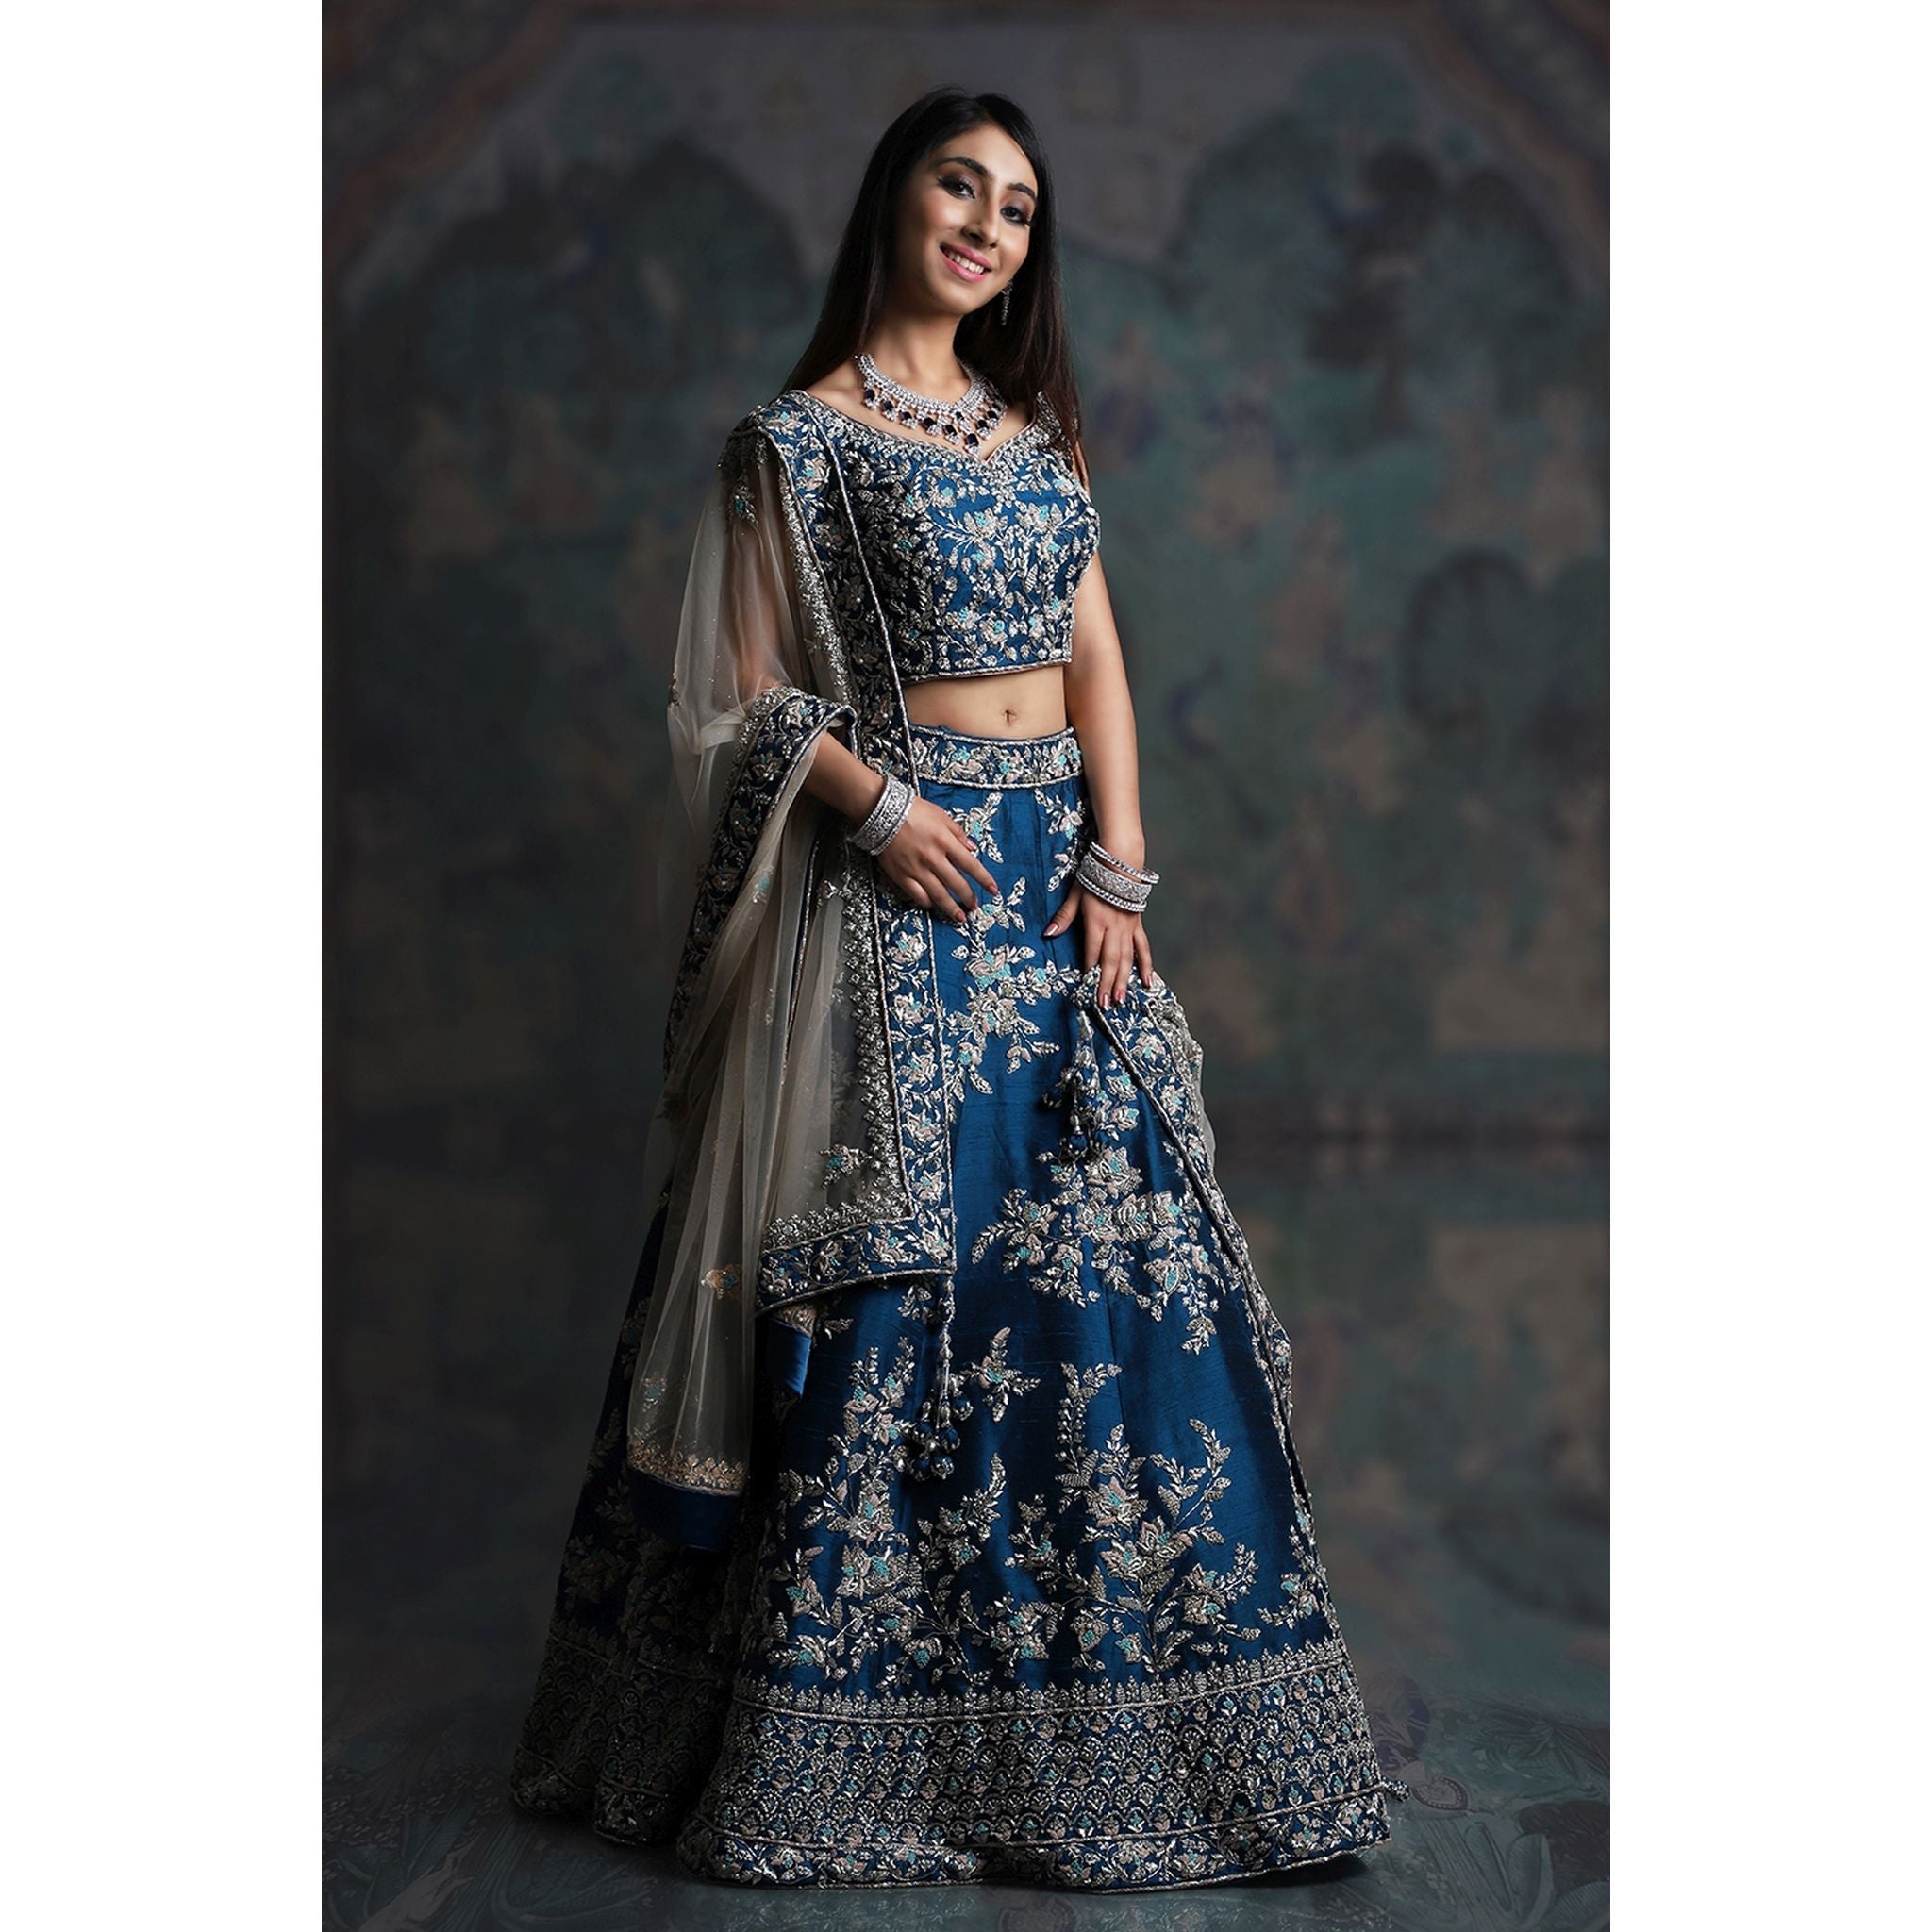 Teal Blue Lehenga - Indian Designer Bridal Wedding Outfit